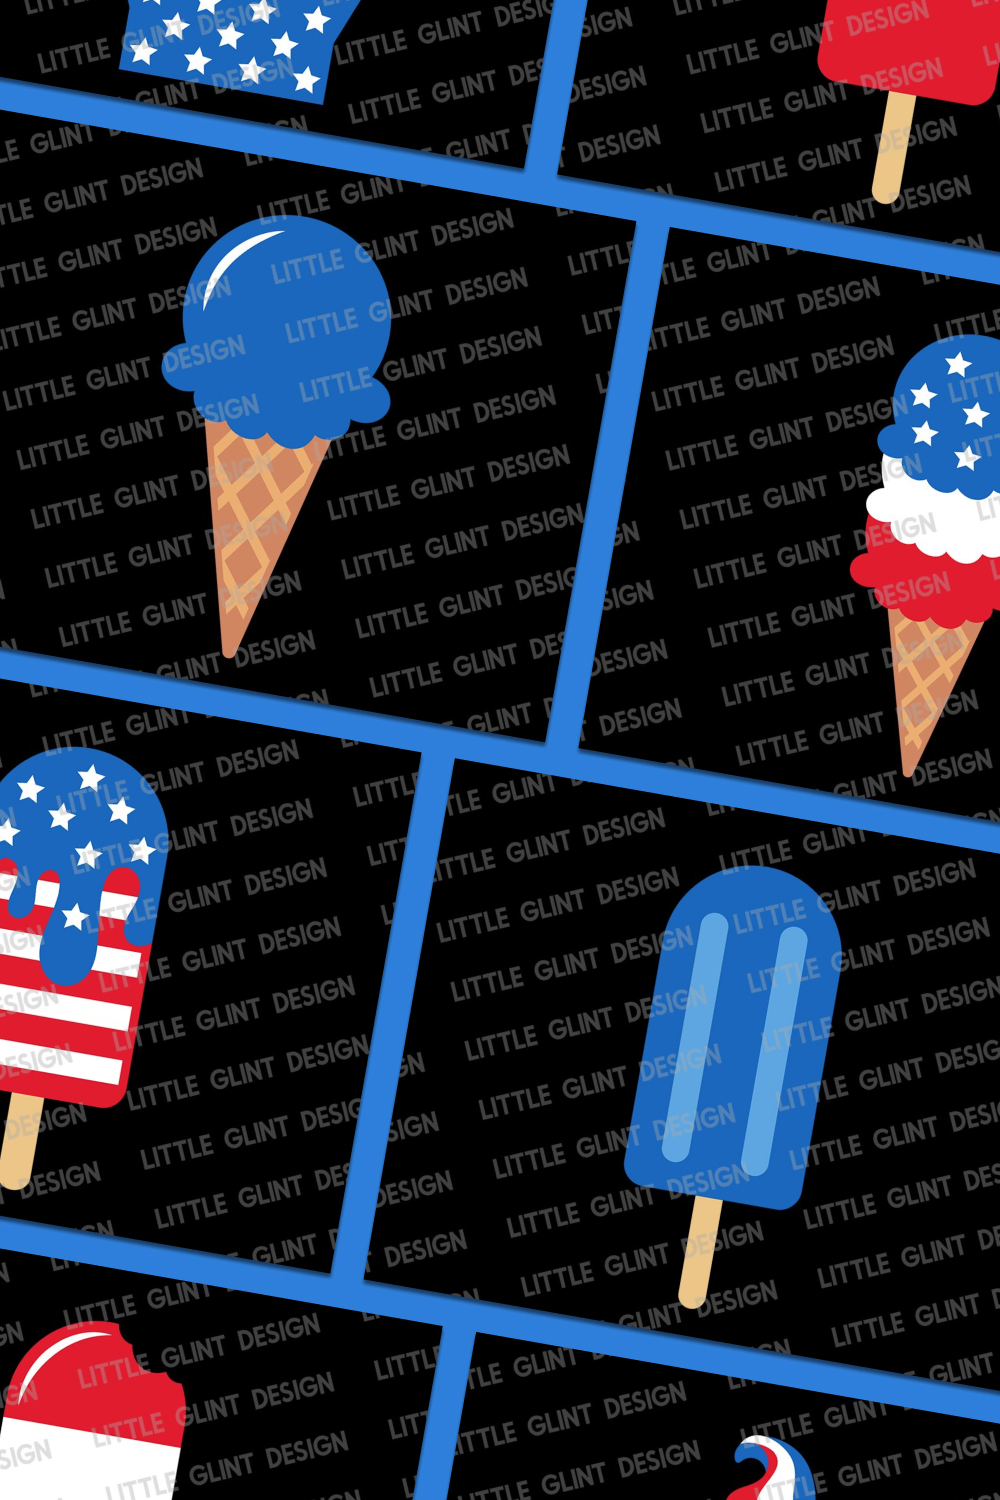 Ice cream on a stick and cones are patriotic.